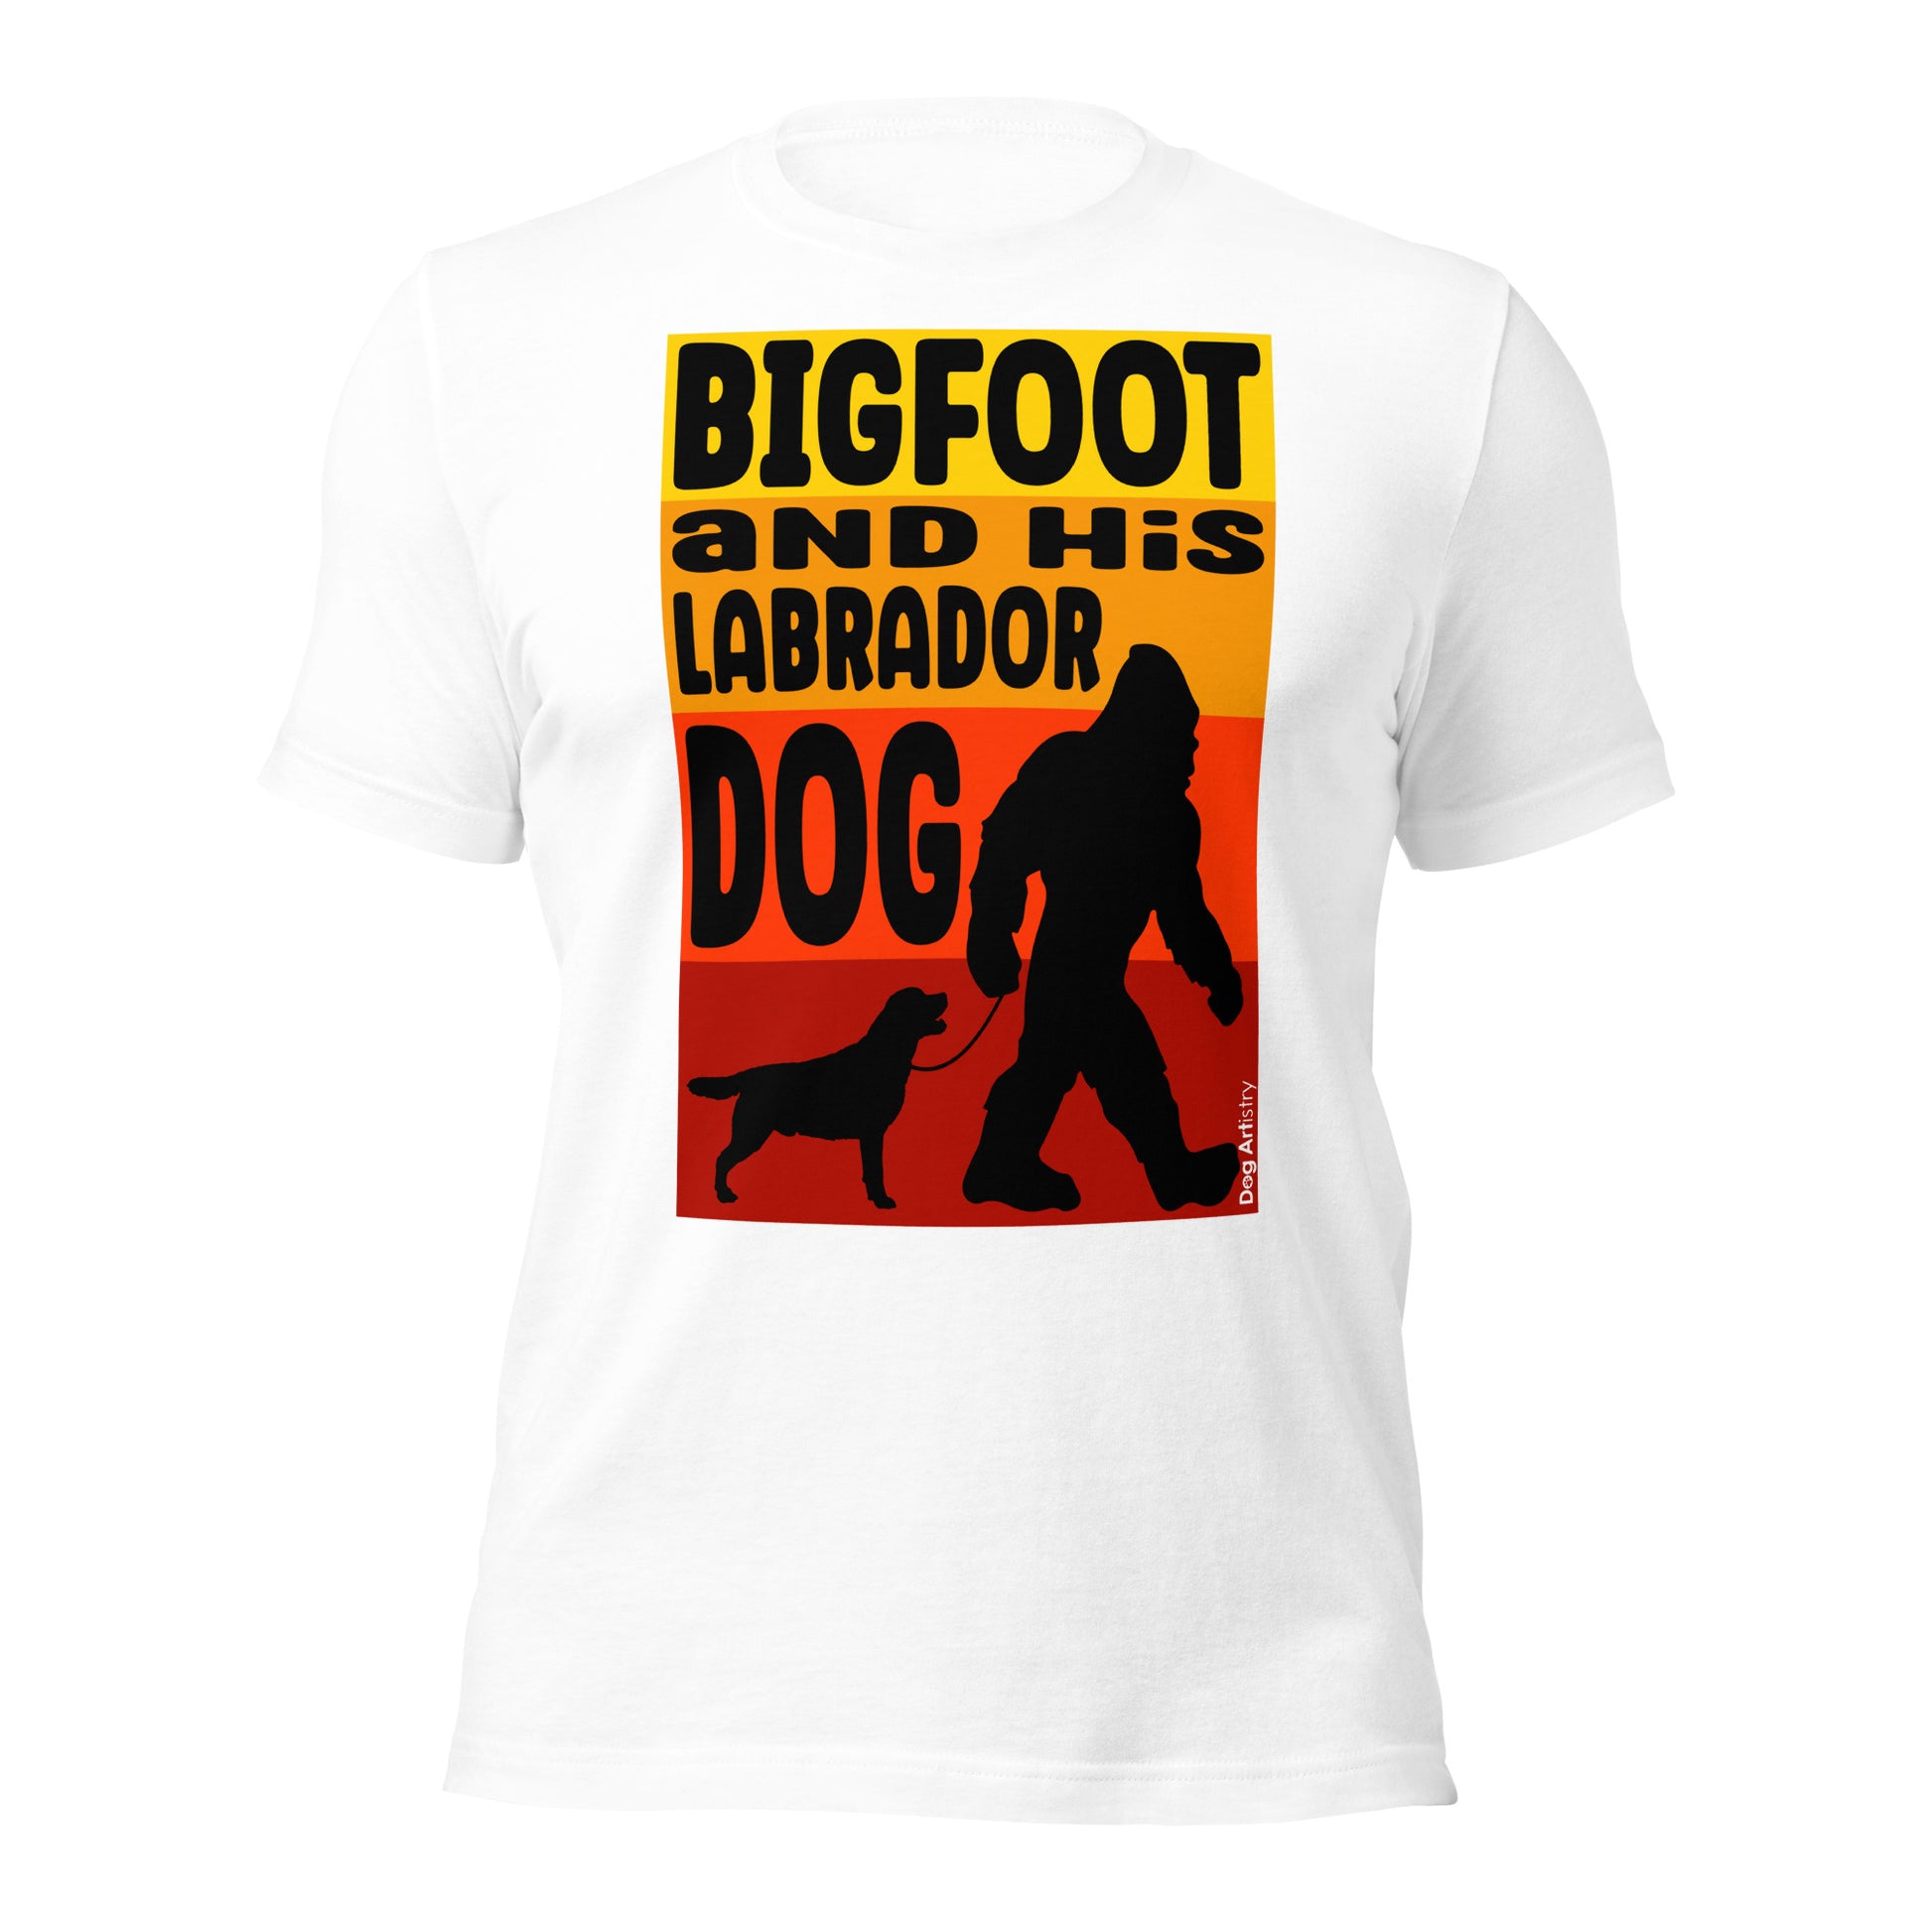 Bigfoot and his labrador retriever unisex white t-shirt by Dog Artistry.